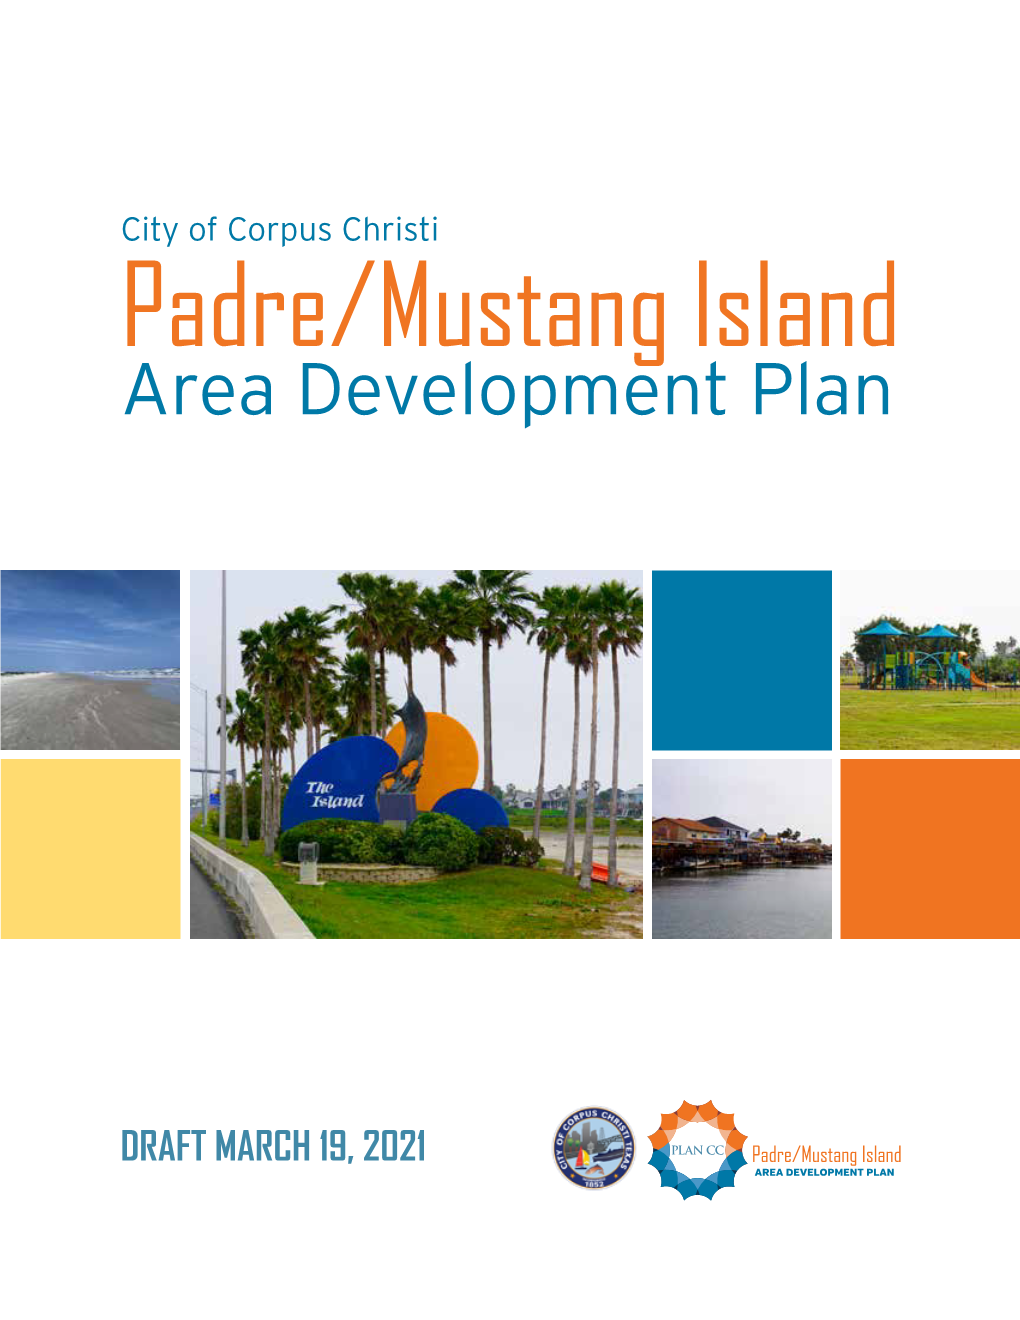 Padre/Mustang Island Area Development Plan